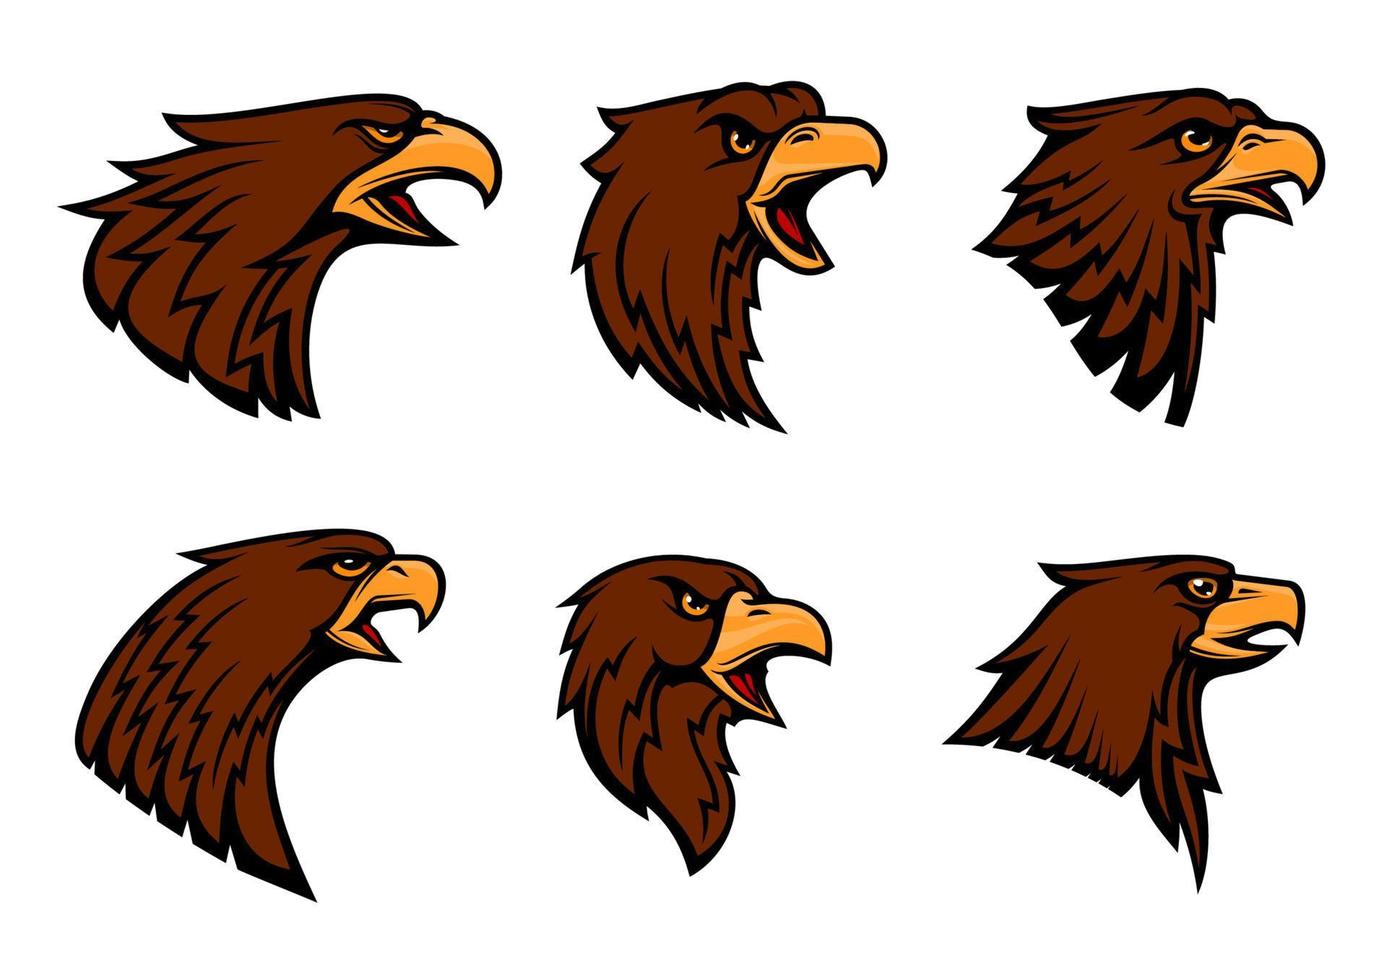 Hawk heraldic mascot vector icons set